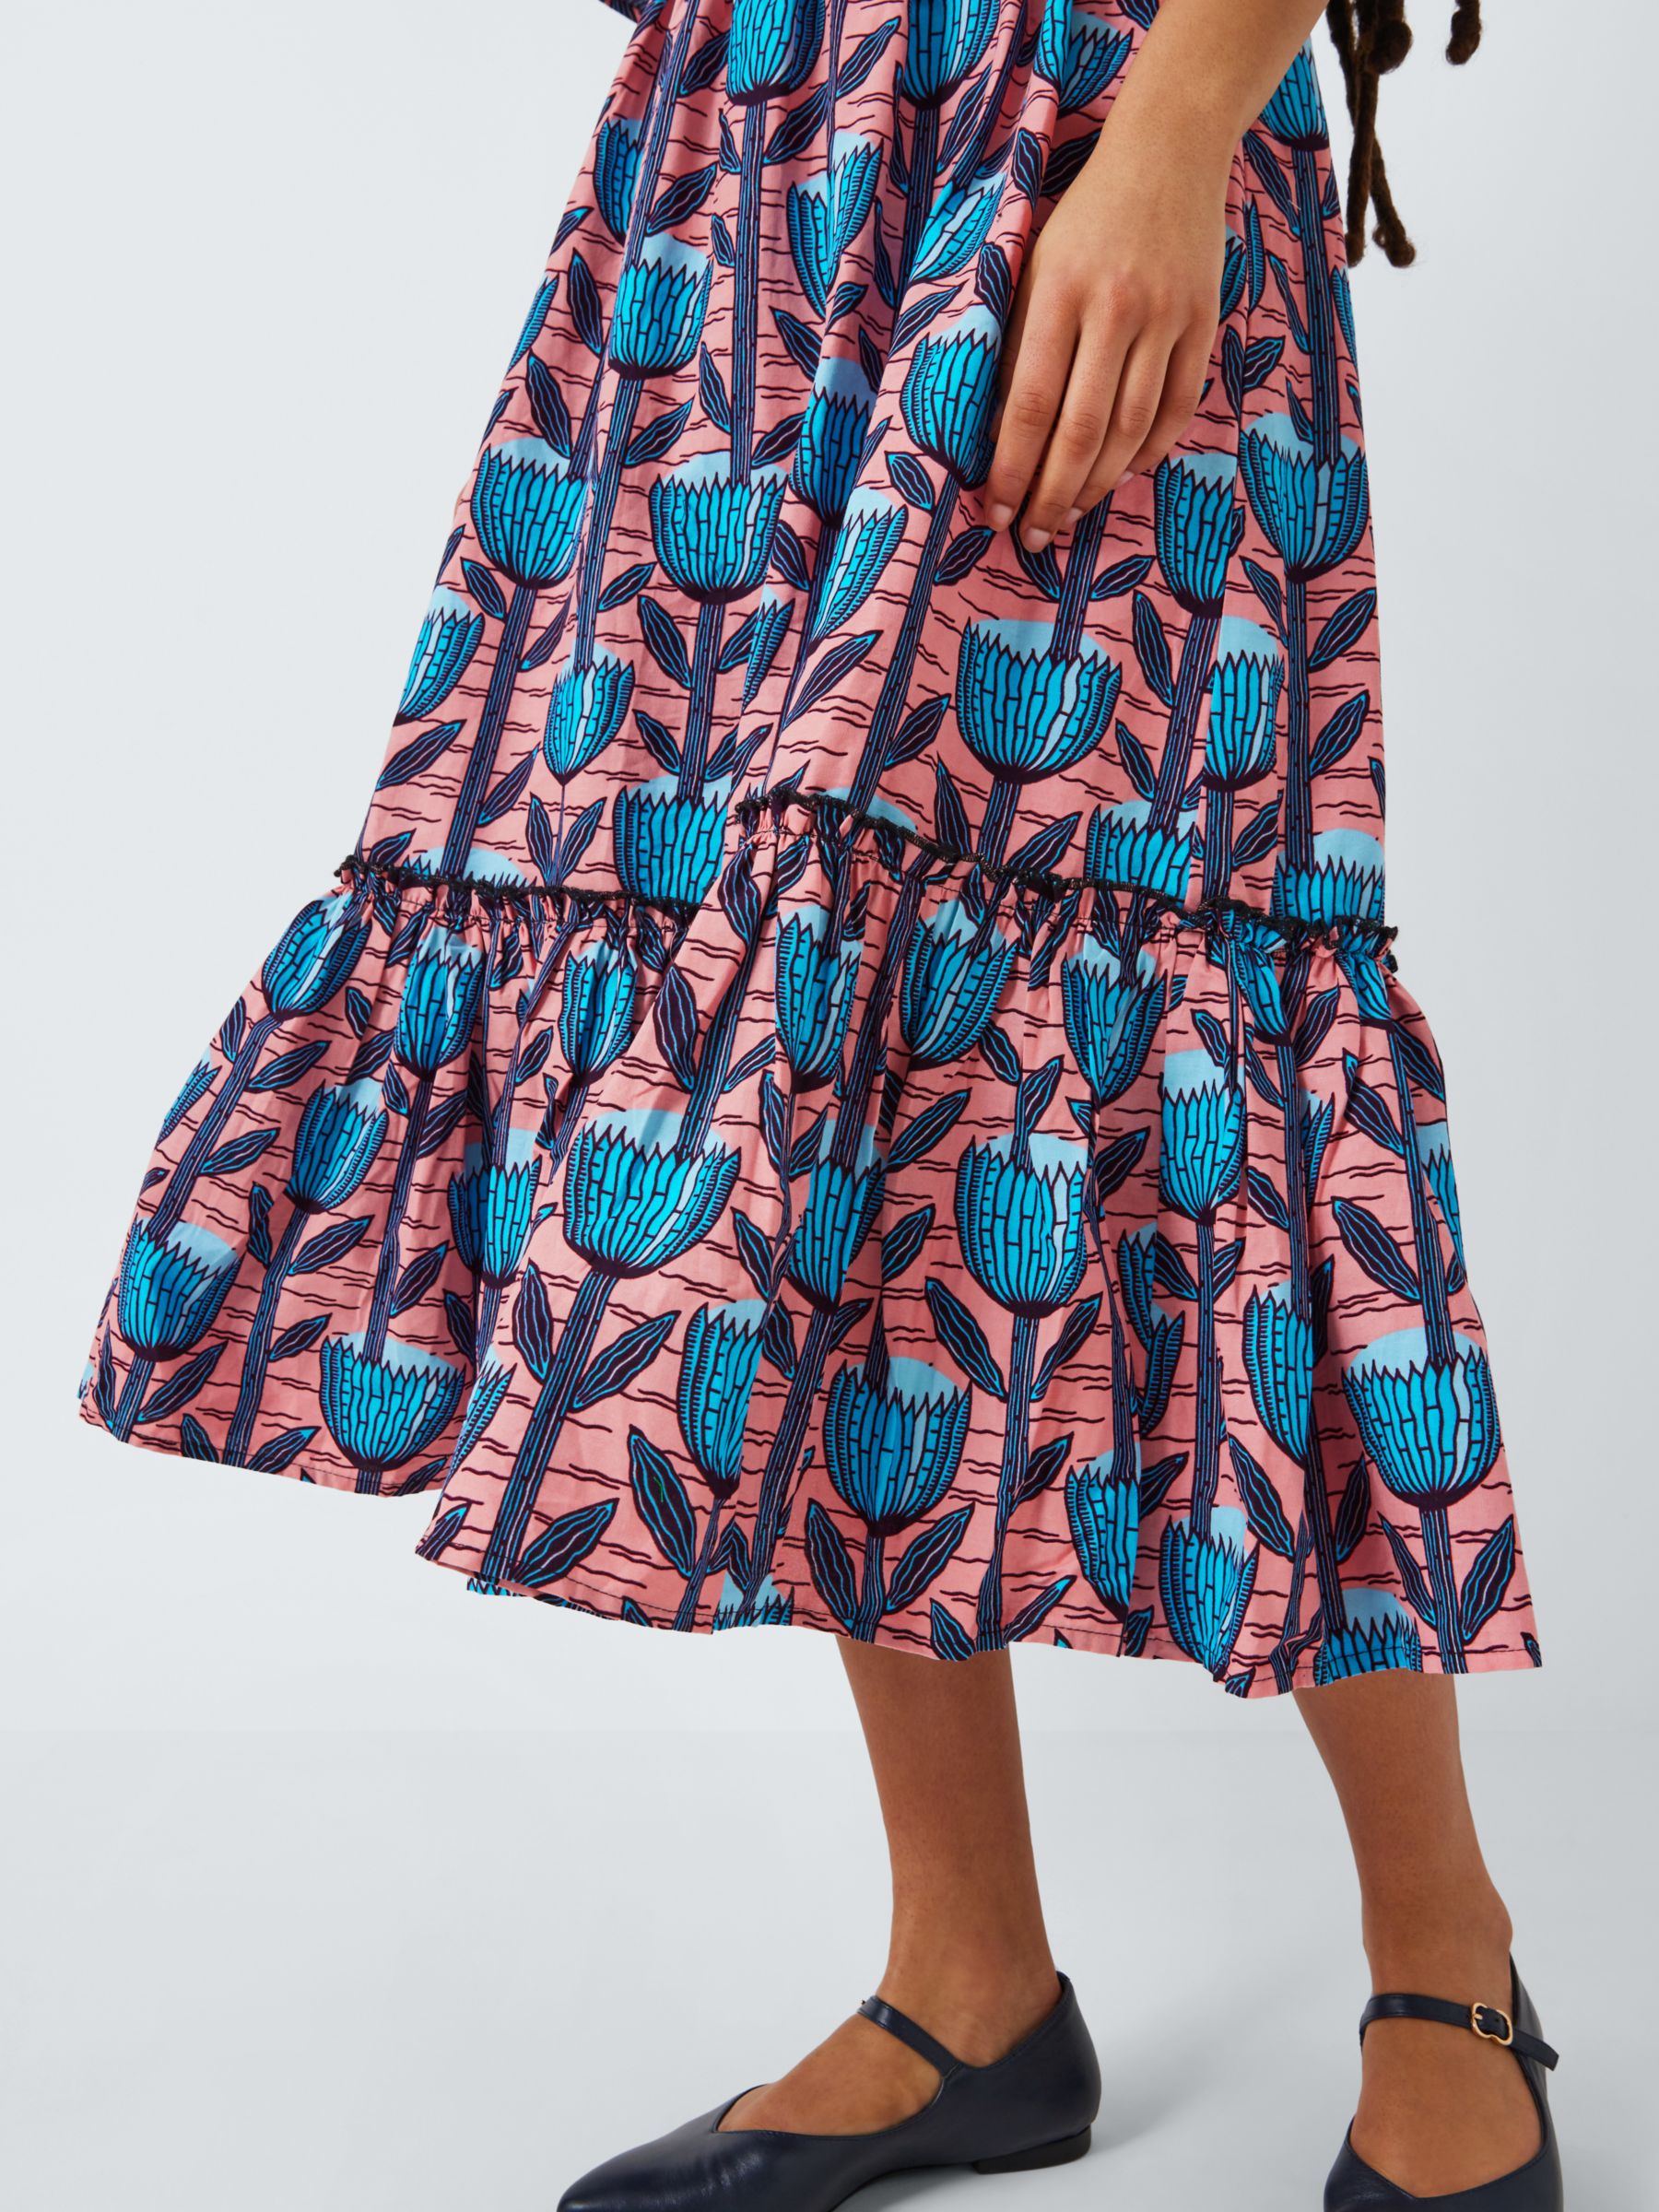 Kemi Telford Floral Print Cotton Midi Dress, Pink/Multi, S